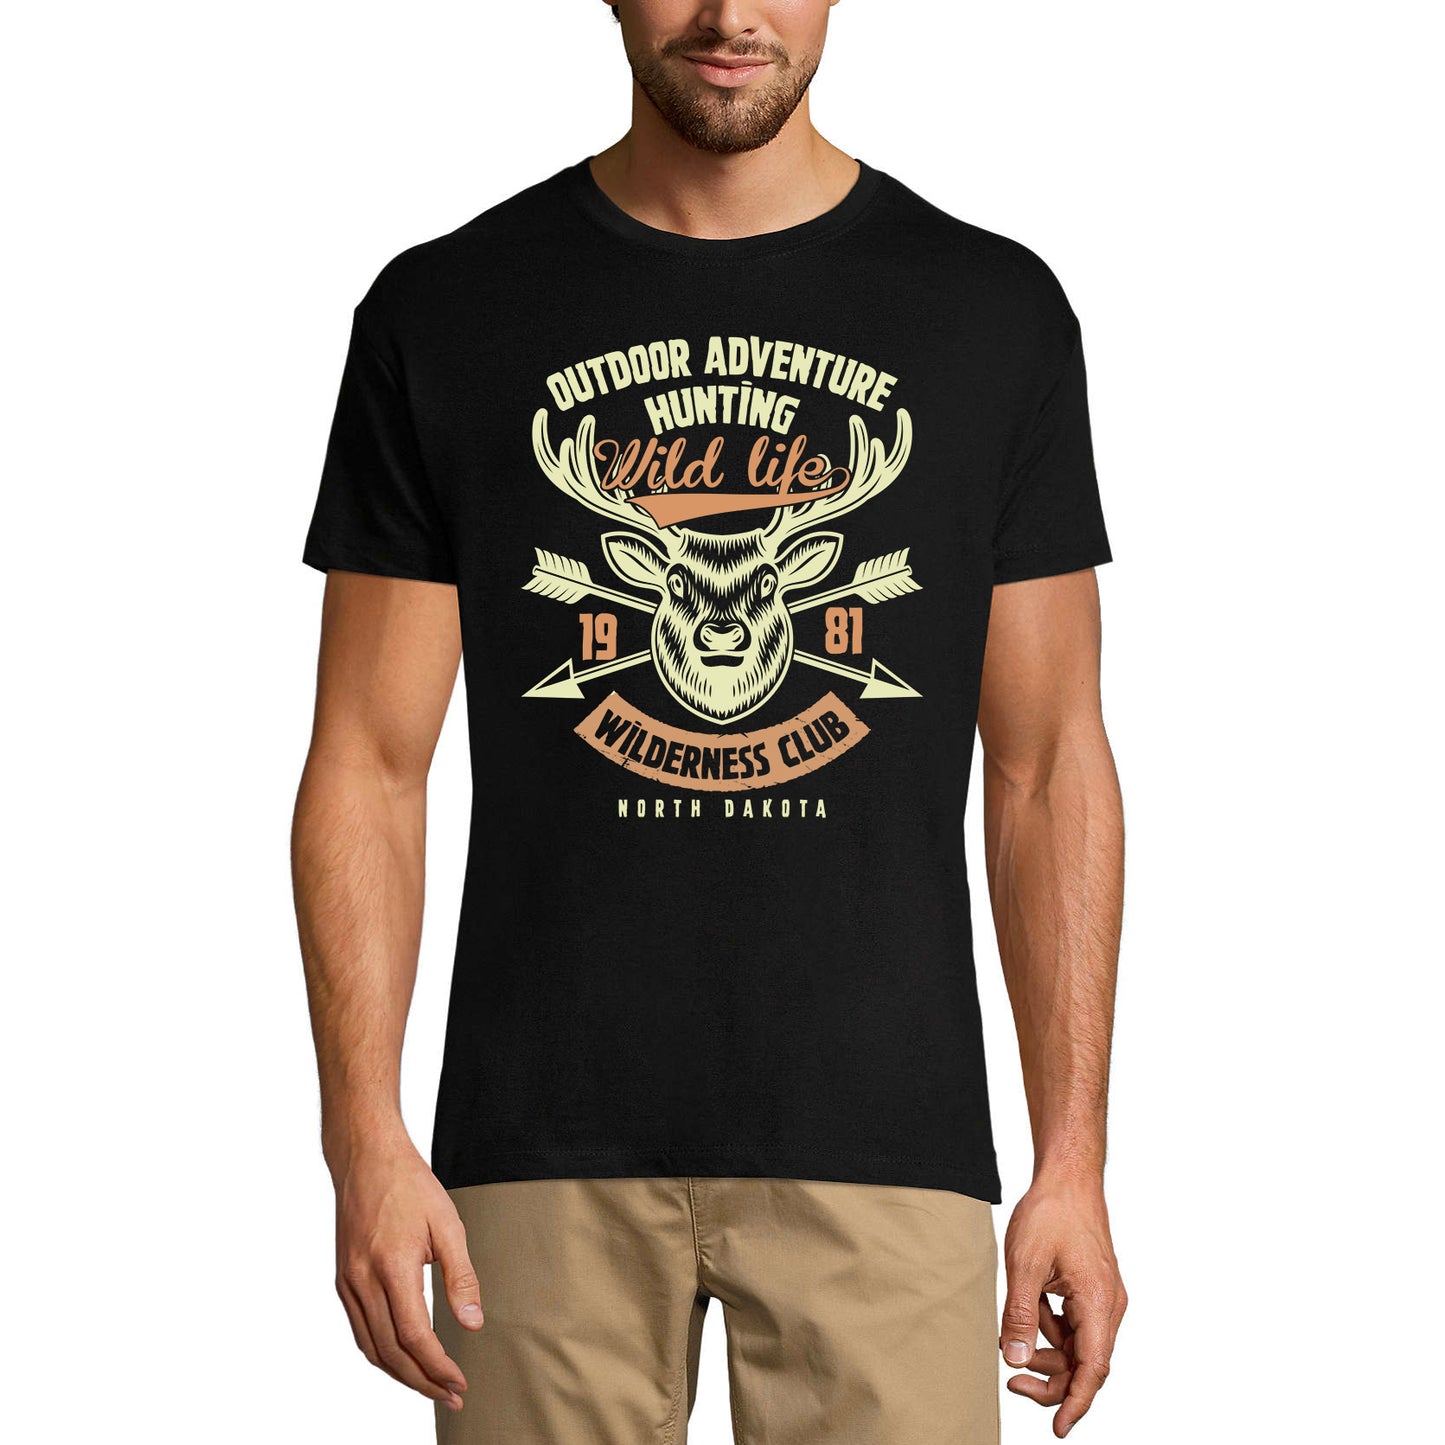 ULTRABASIC Graphic Men's T-Shirt Outdoor Adventure Hunting - Wild Life 1981 - Vintage Hunter's Tee Shirt